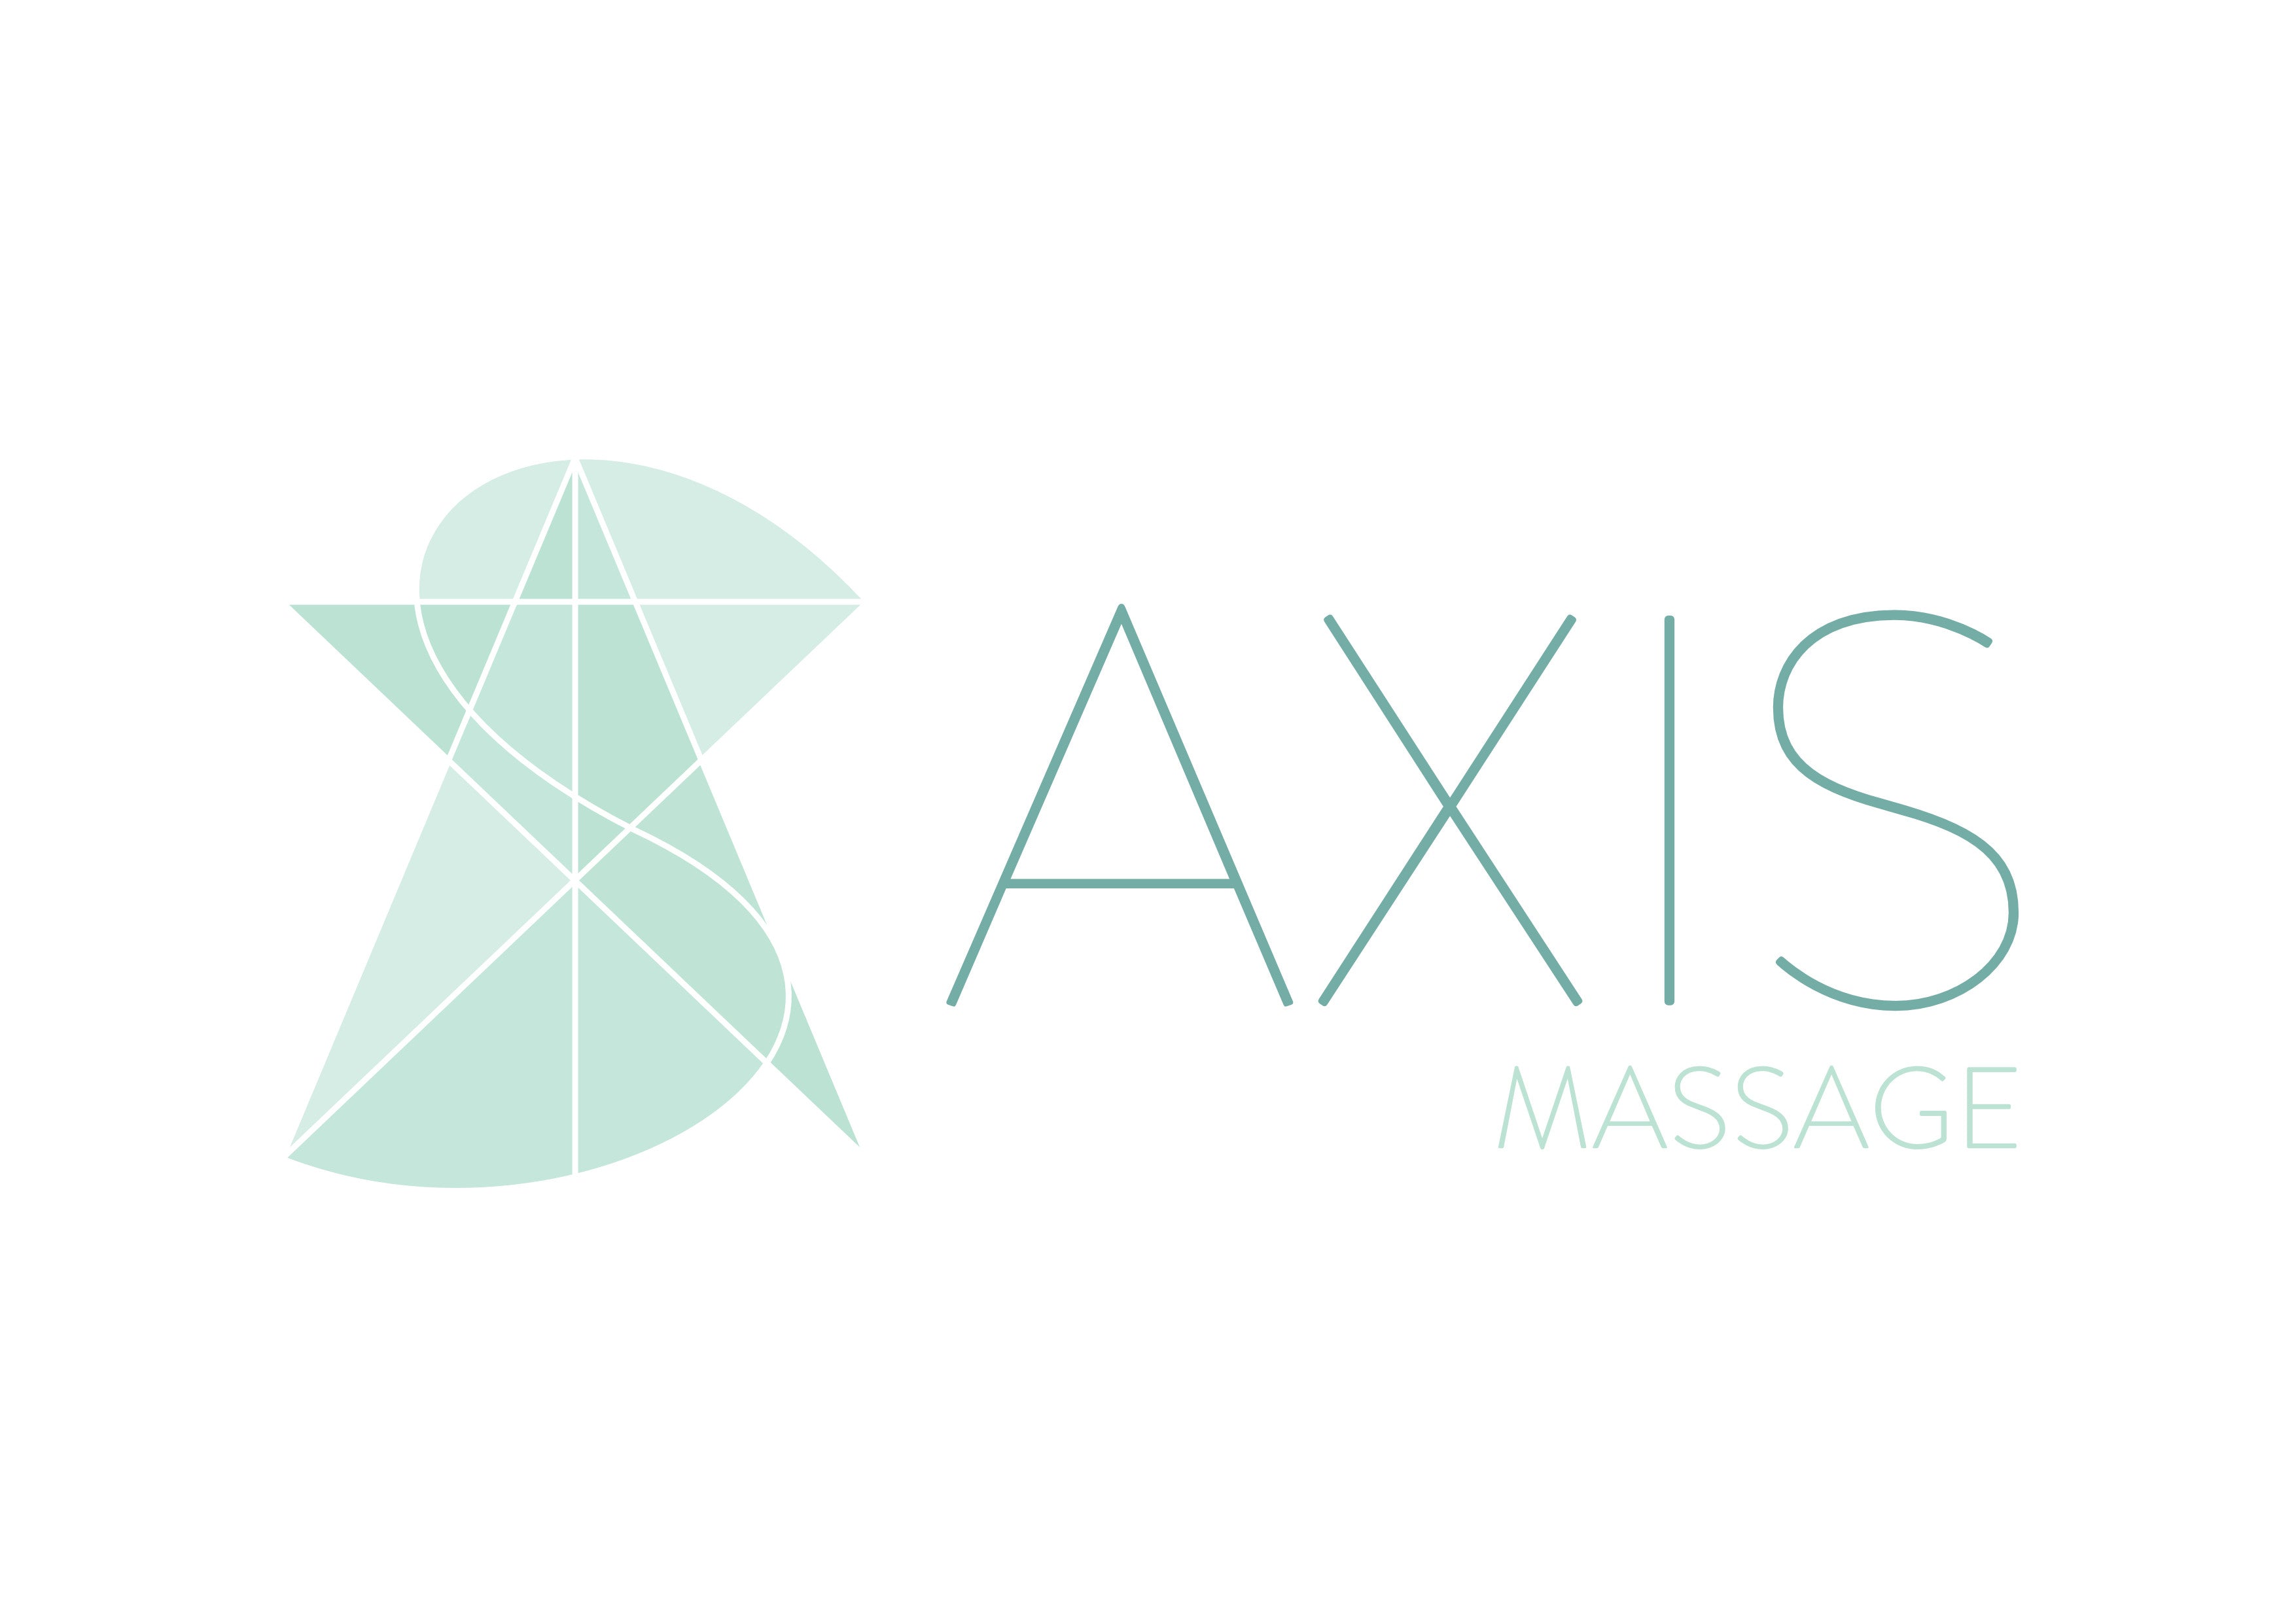 Axis Massage